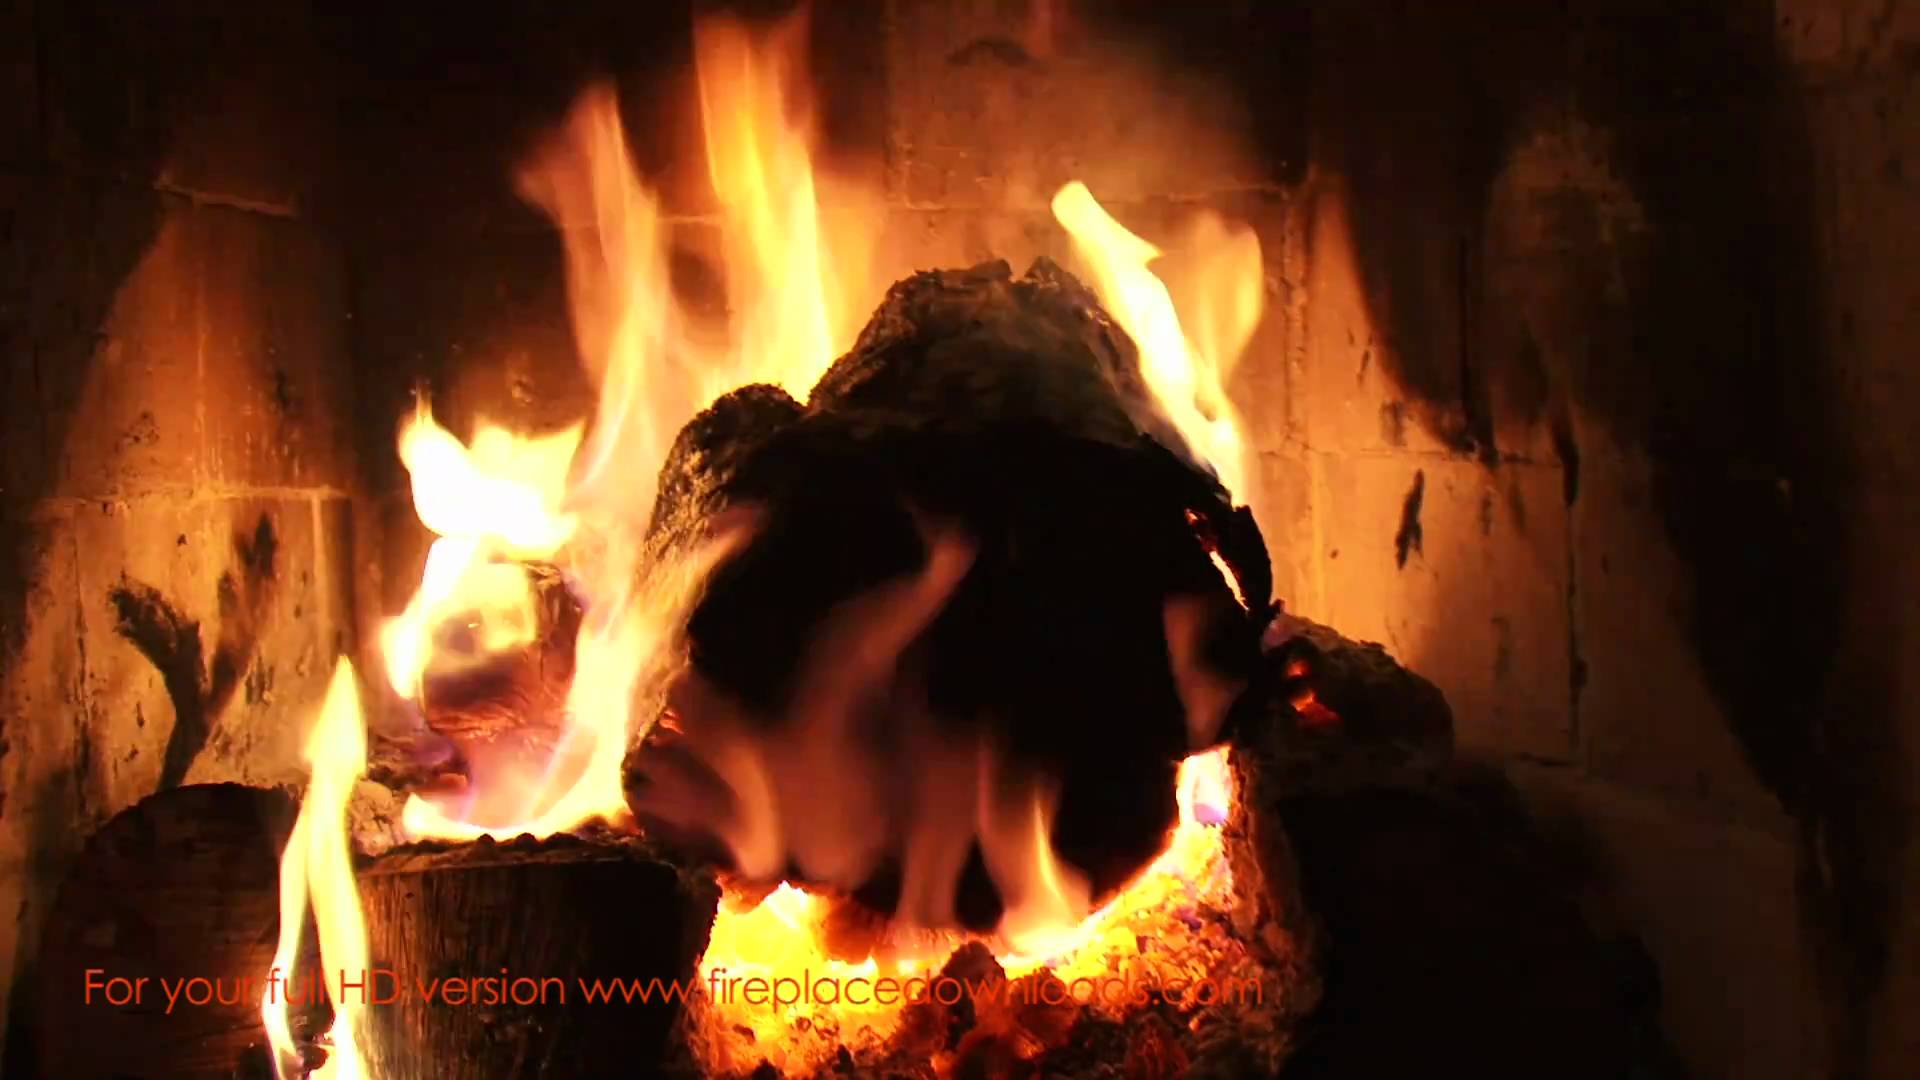 Virtual HD Fireplace Video 1080p Large Log Fire